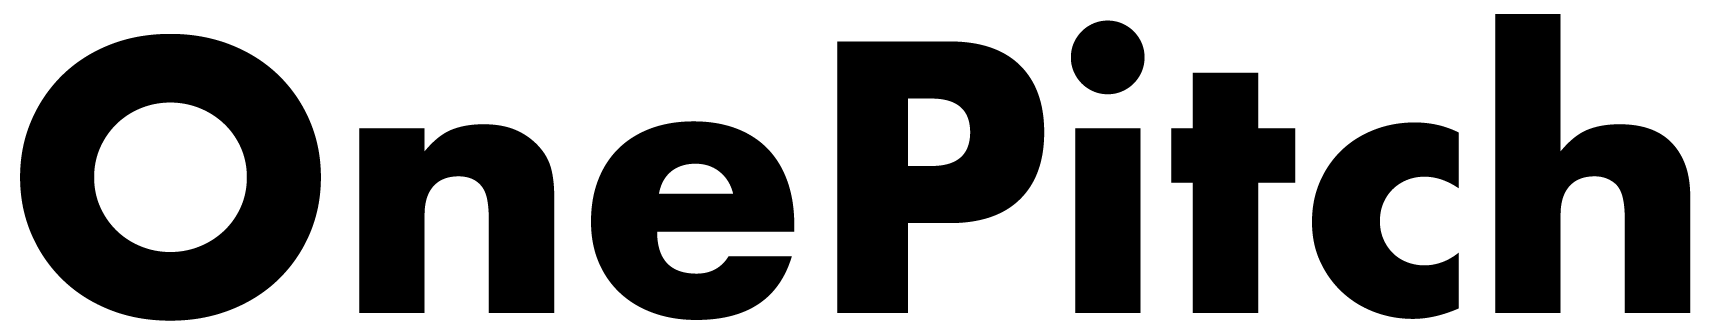 OnePitch Logo _ black on transparent